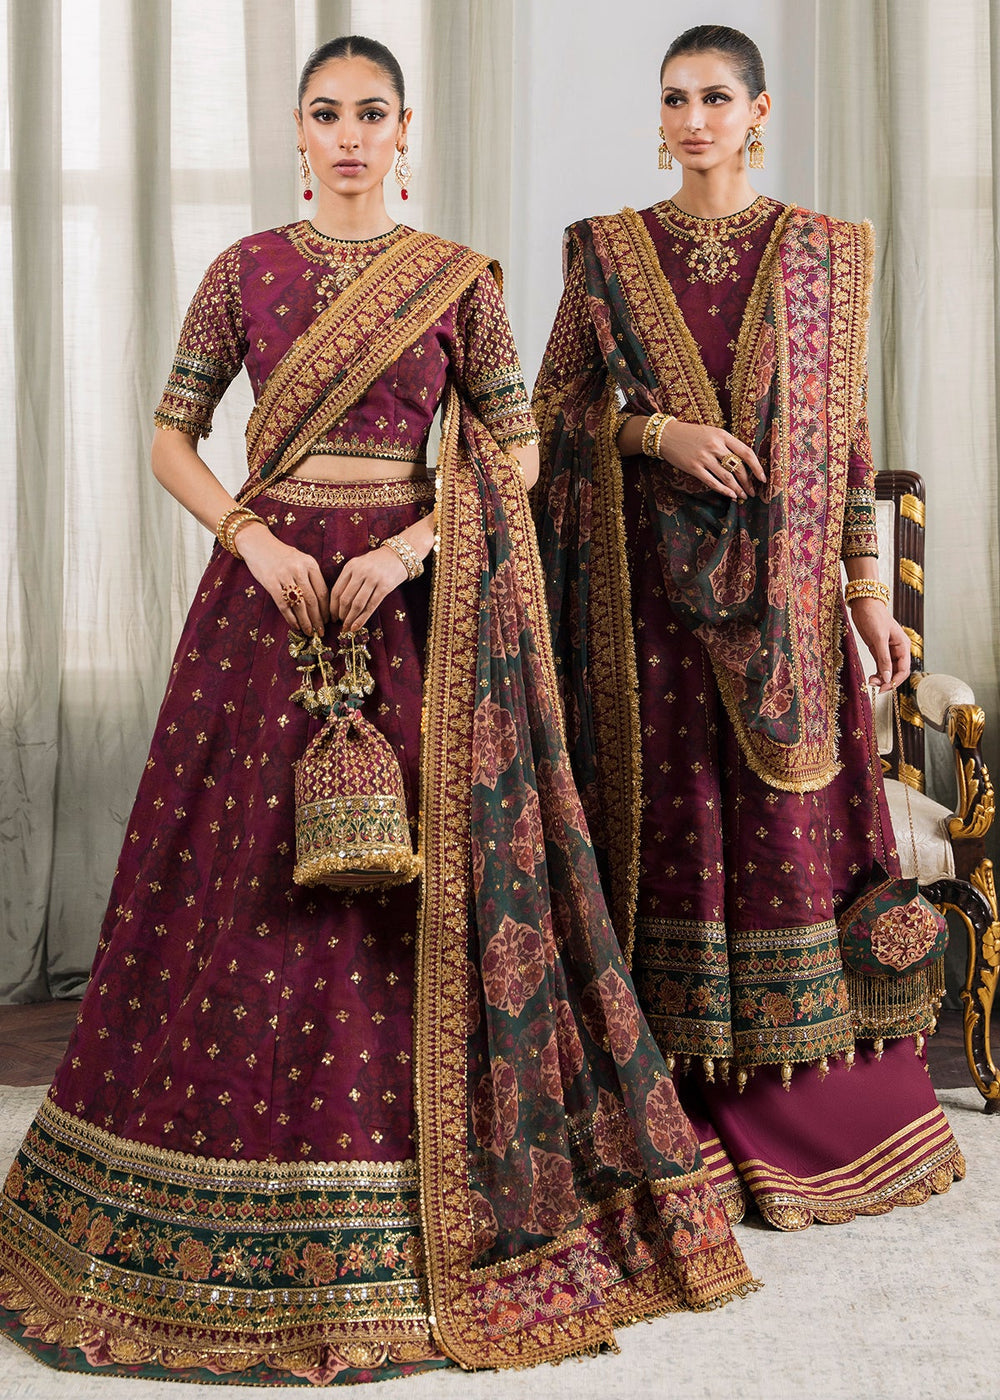 Stunning Tena Durrani Wedding Dresses You Can Buy Online